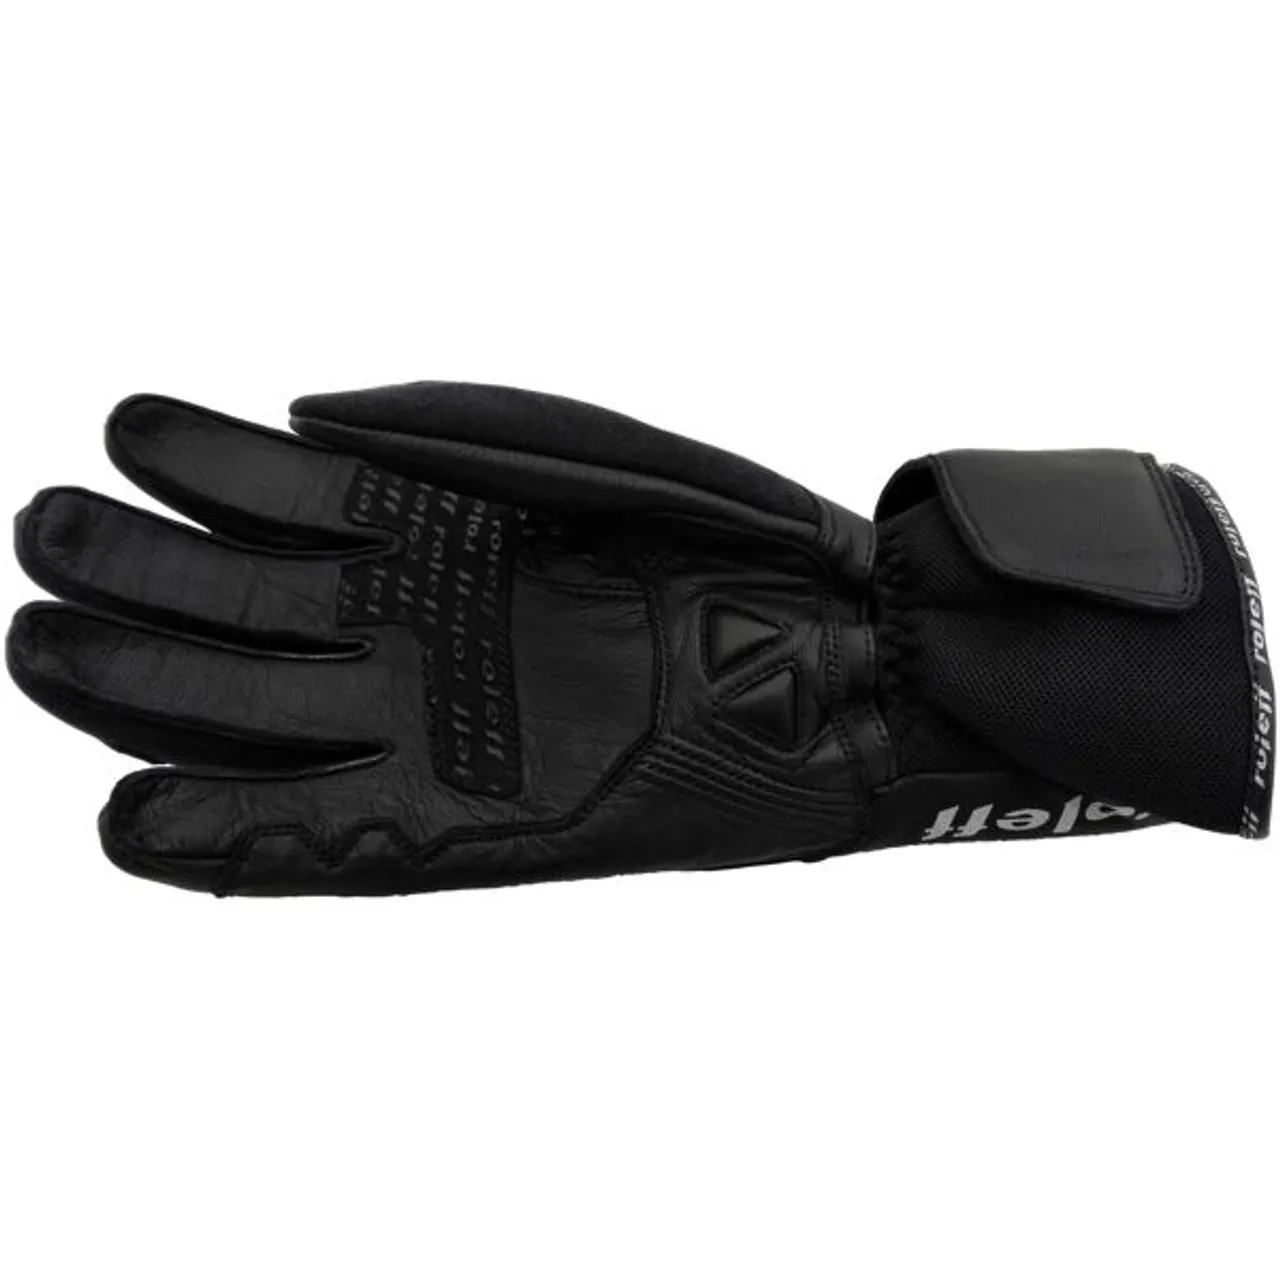 Motorradhandschuhe ROLEFF "RO 45" Handschuhe Gr. S, schwarz Motorradhandschuhe